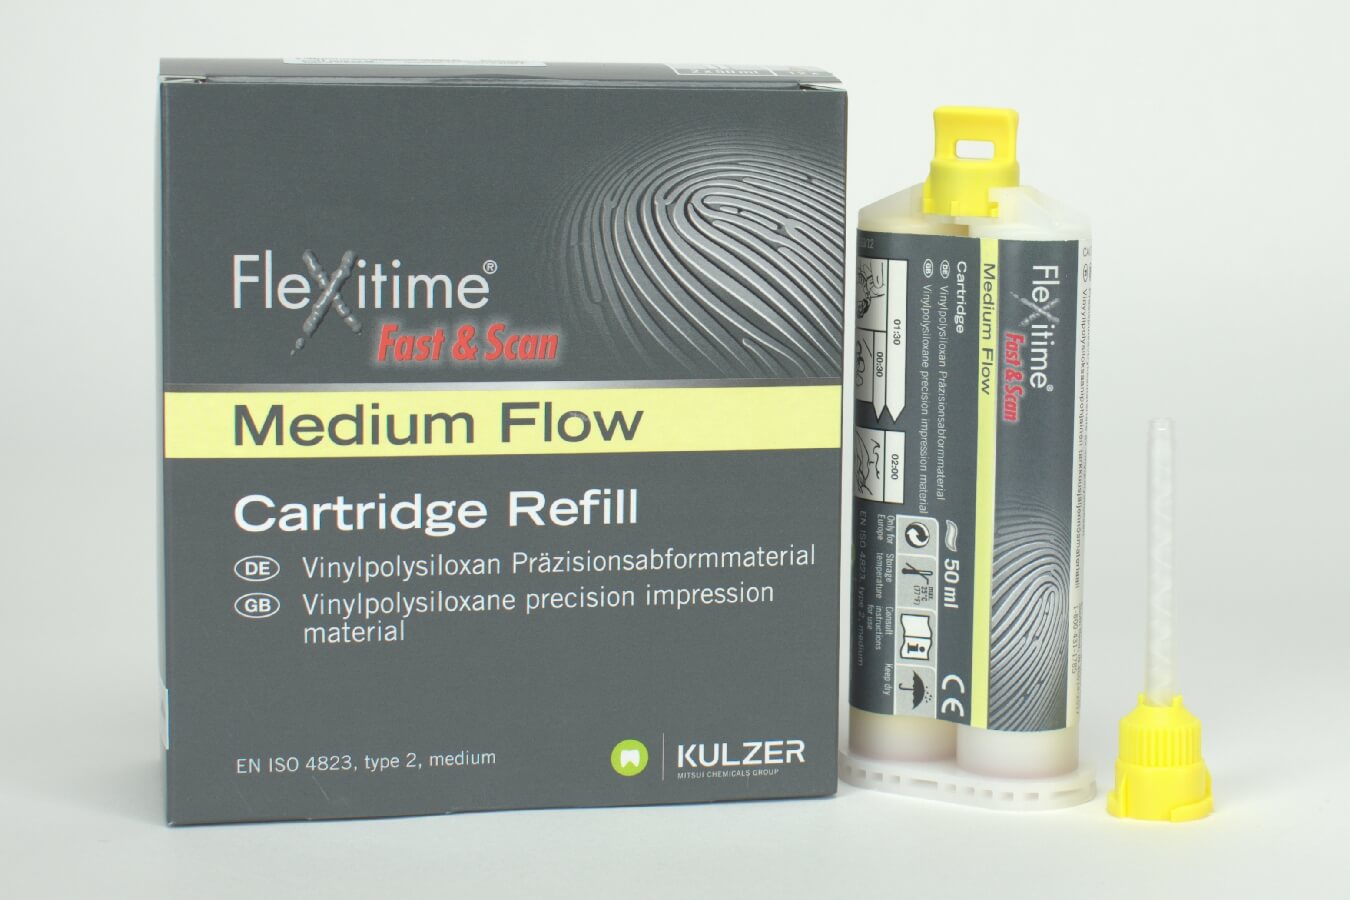 Flexitime F & S medium Flow